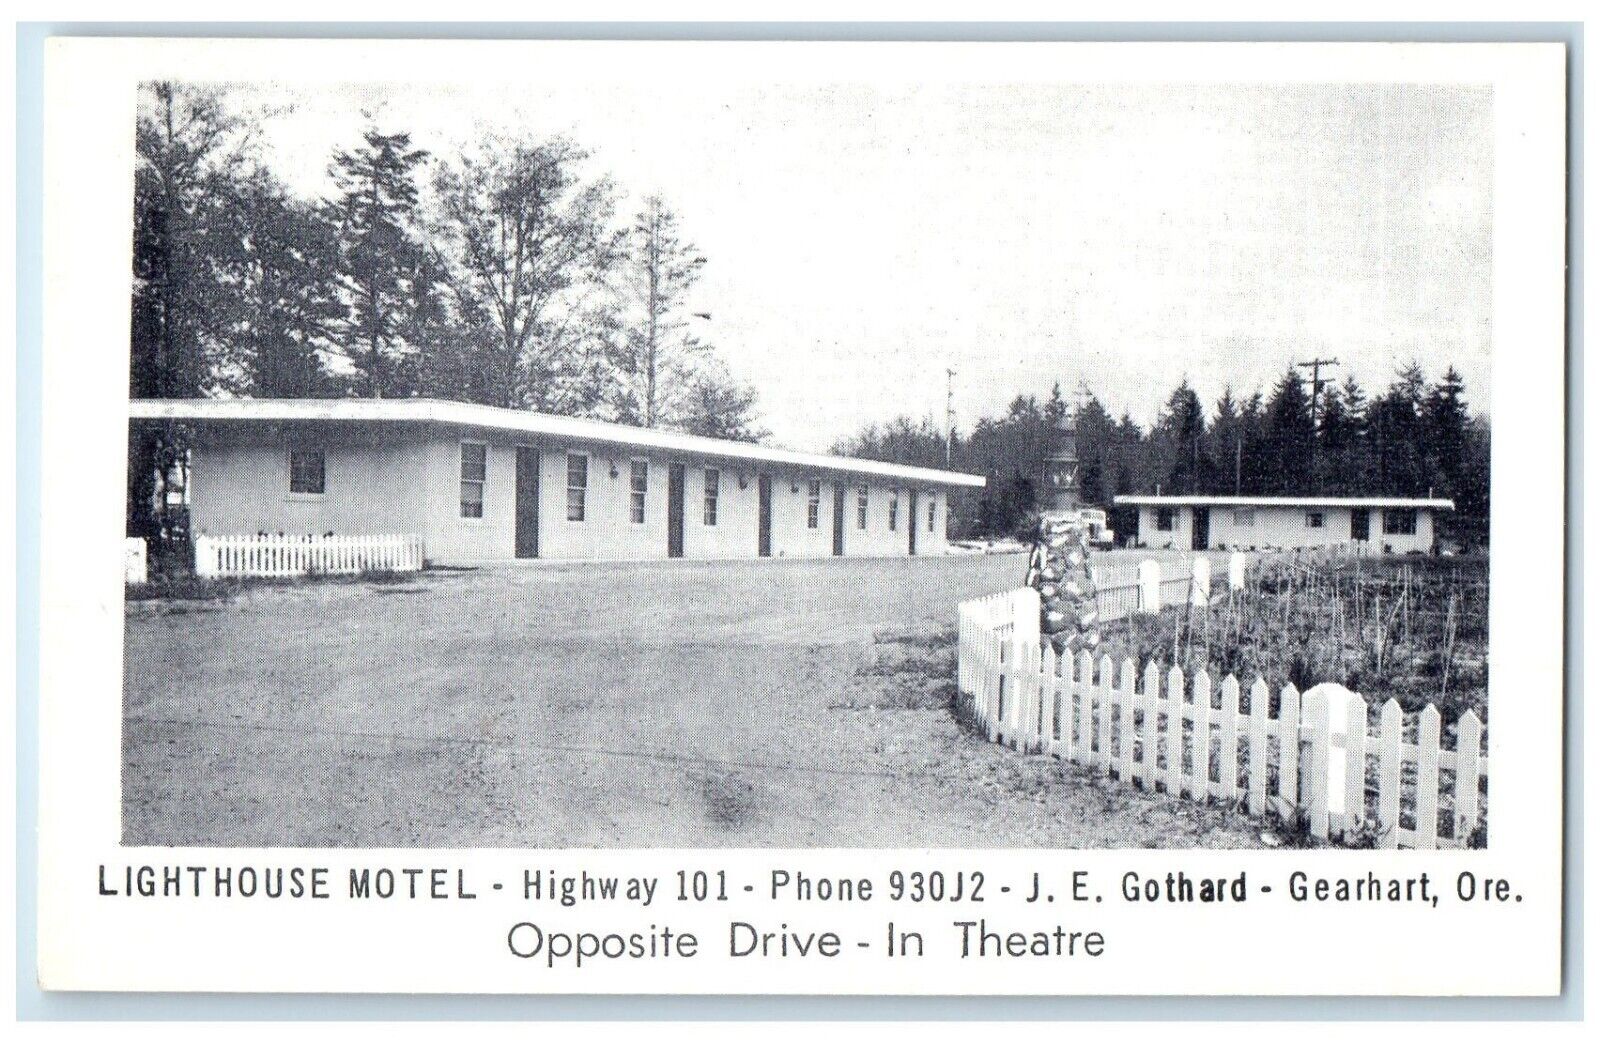 c1940 Lighthouse Motel Highway Opposite Drive Theatre Gearhart Oregon Postcard